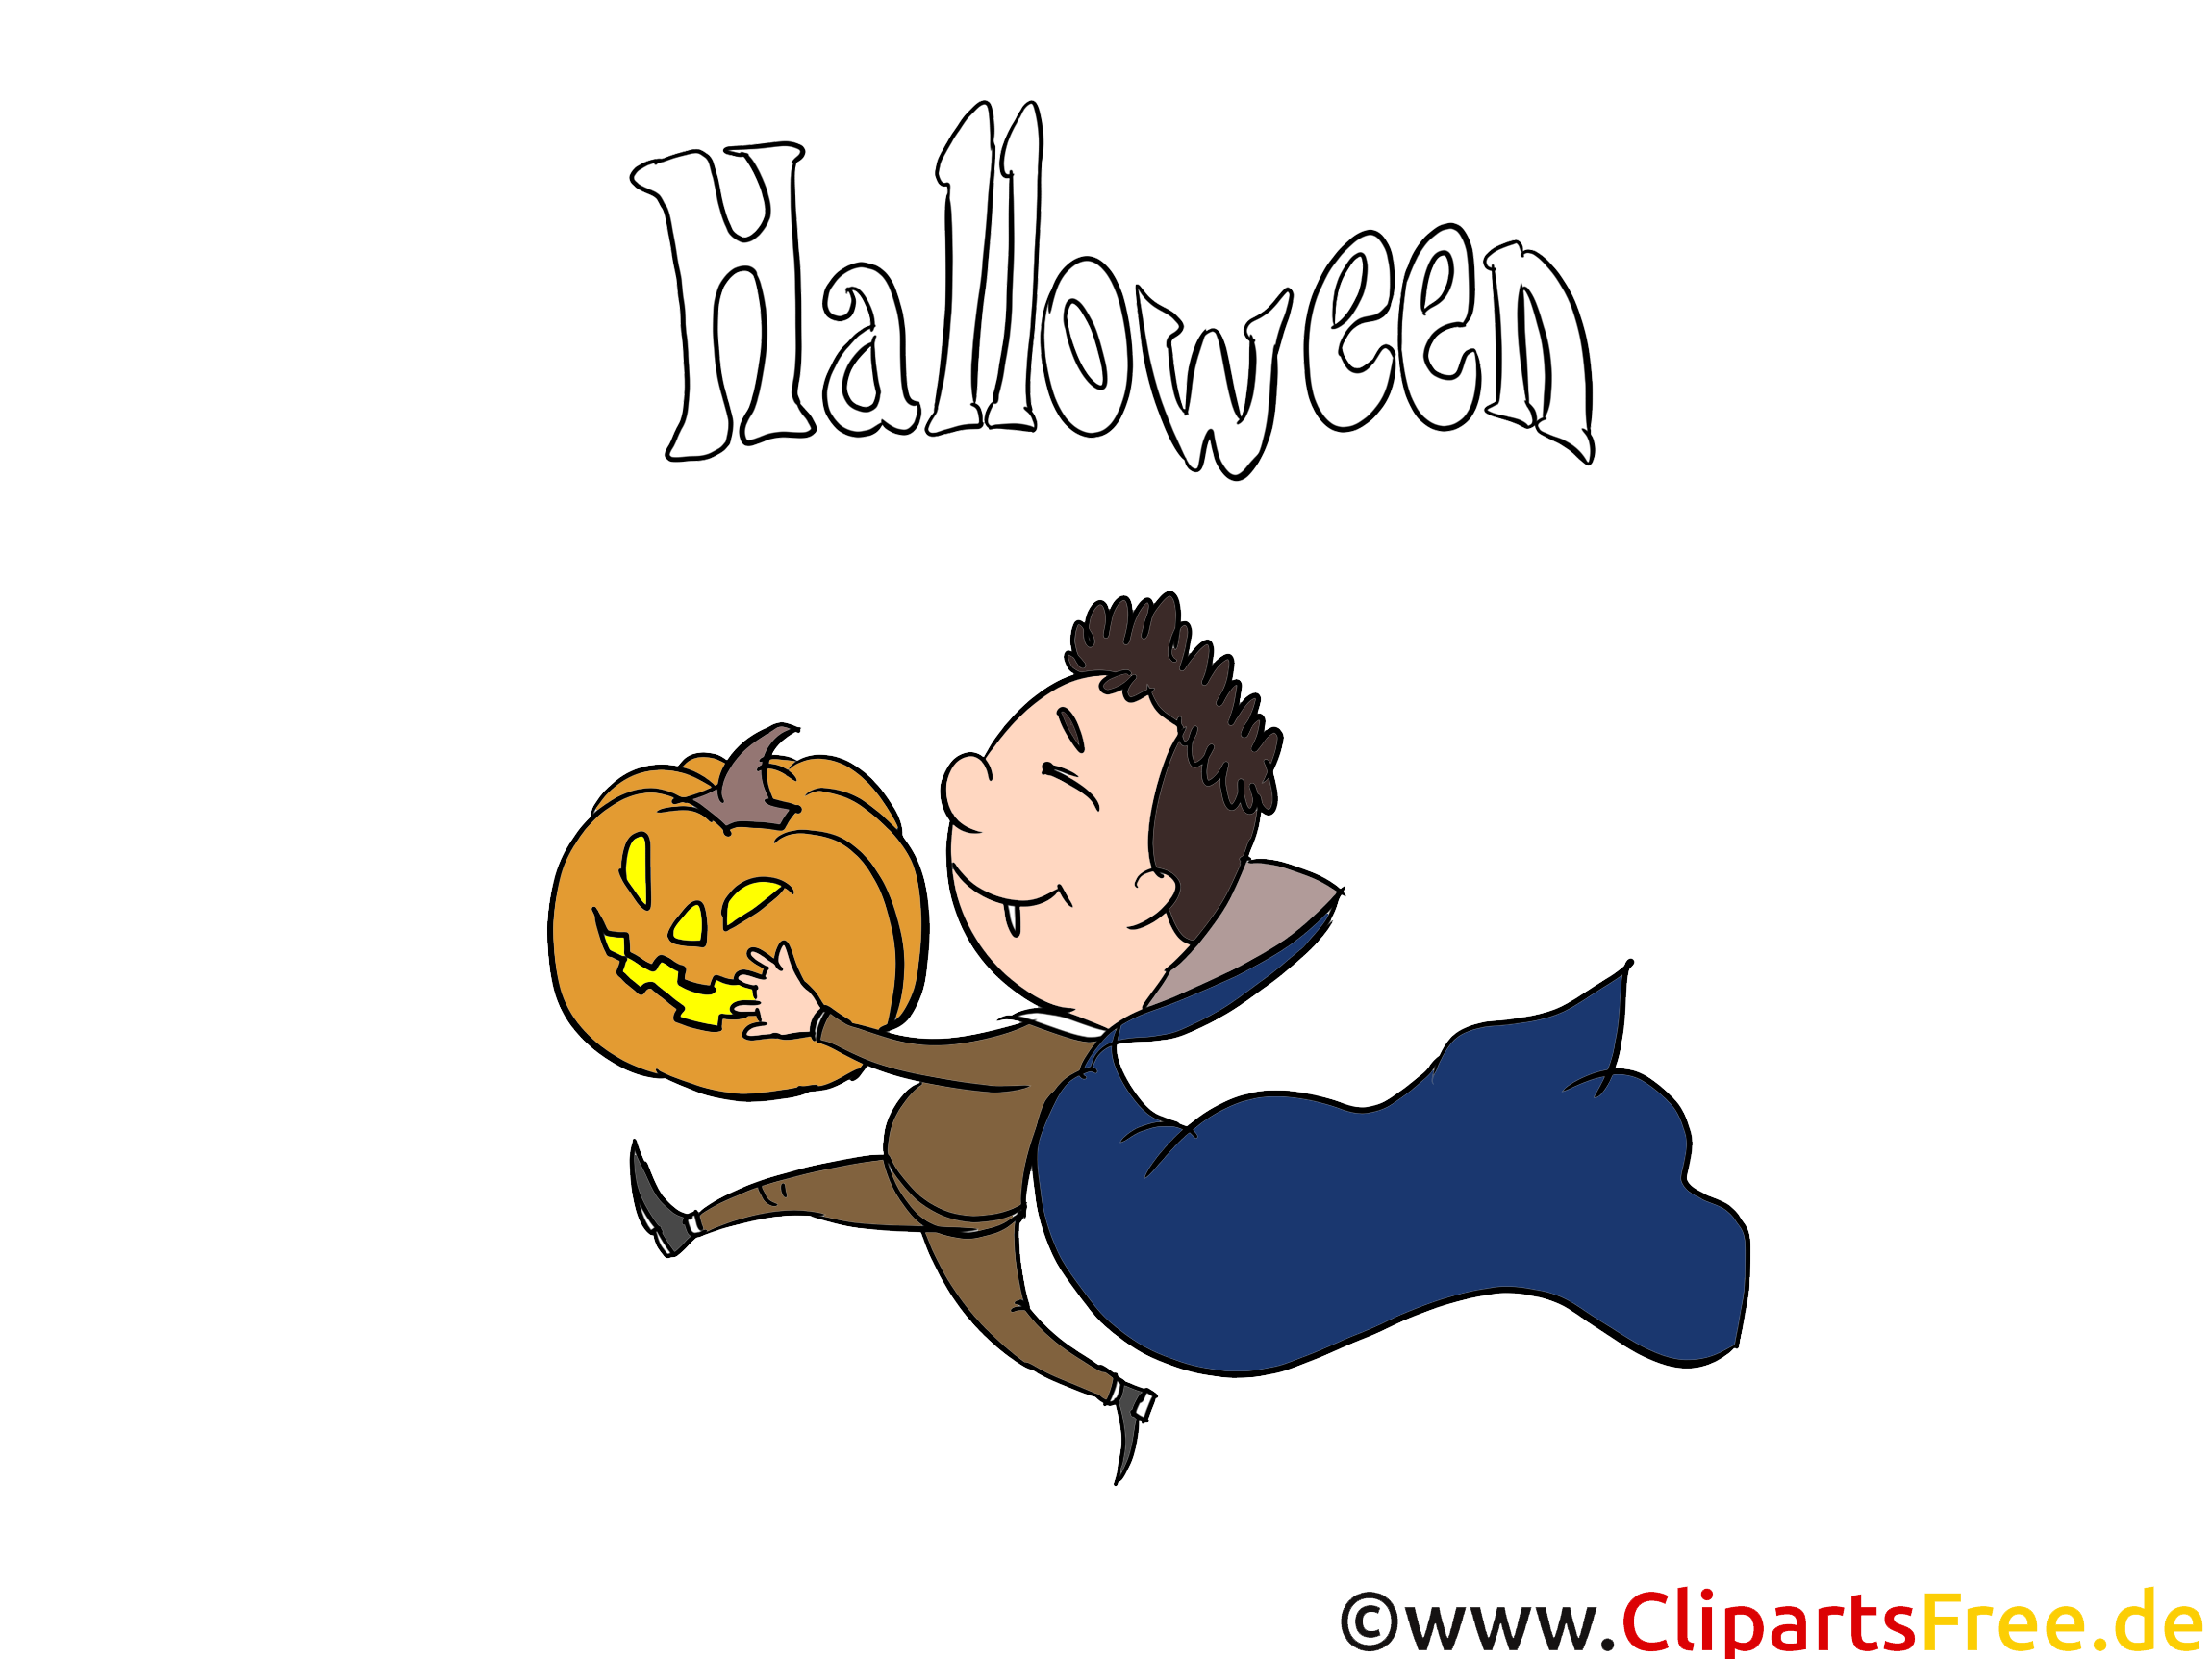 Dracula image gratuite - Halloween illustration